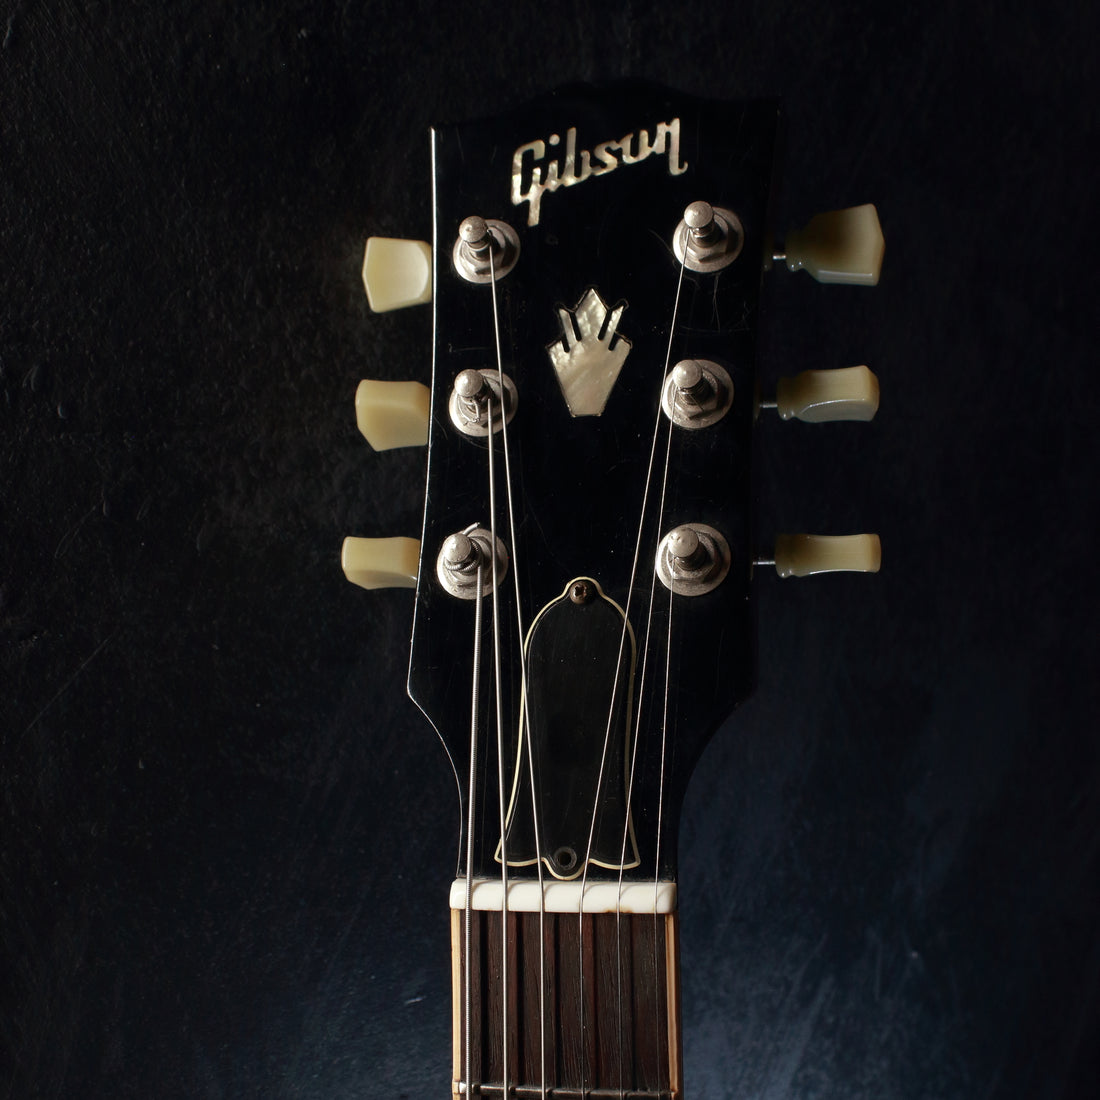 Gibson Custom Shop ES-339 Cherry 2009